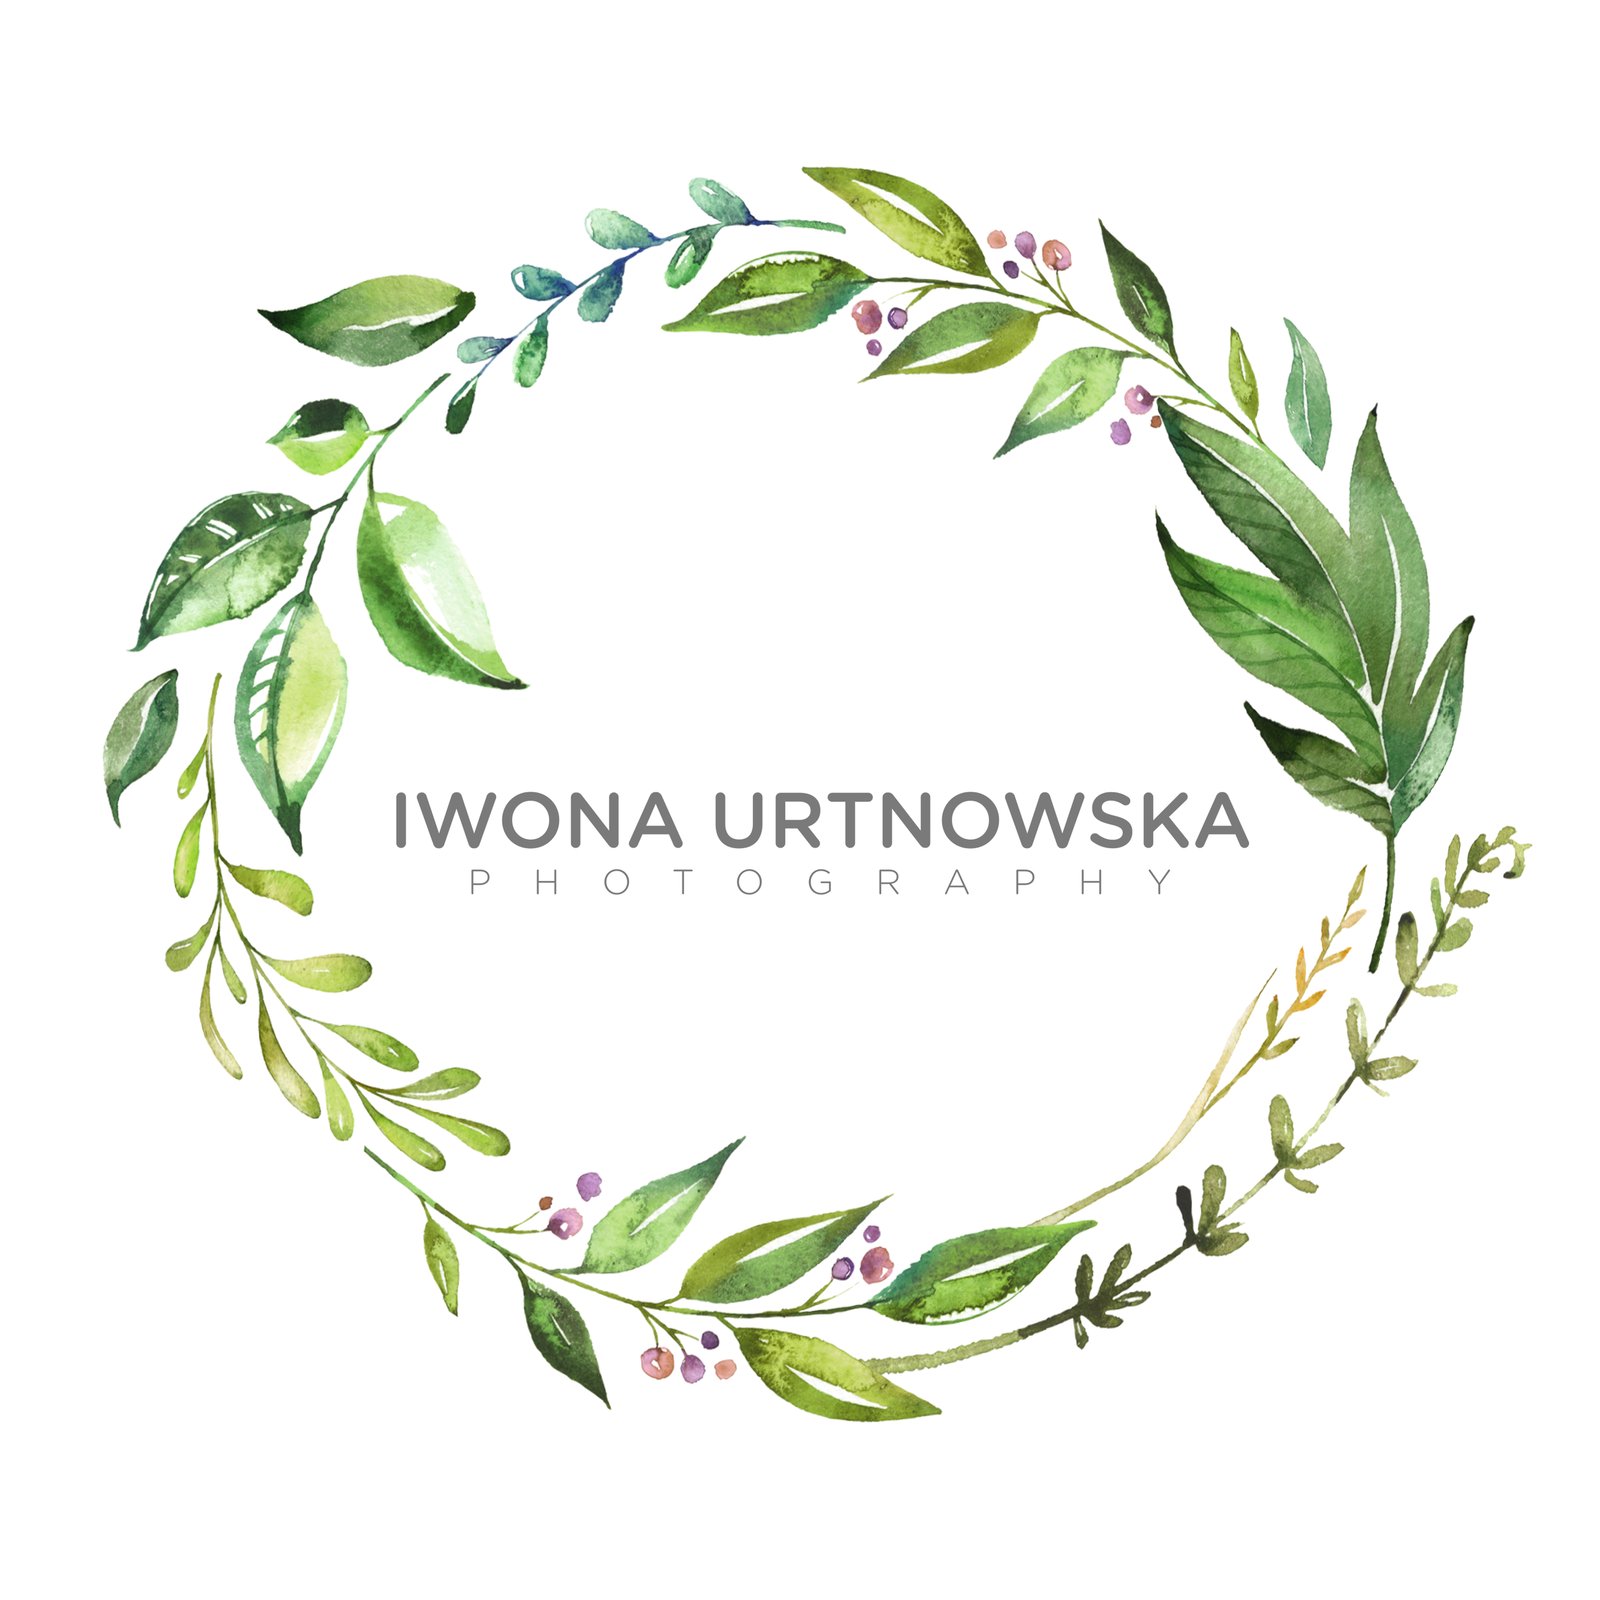 Iwona Urtnowska Photography